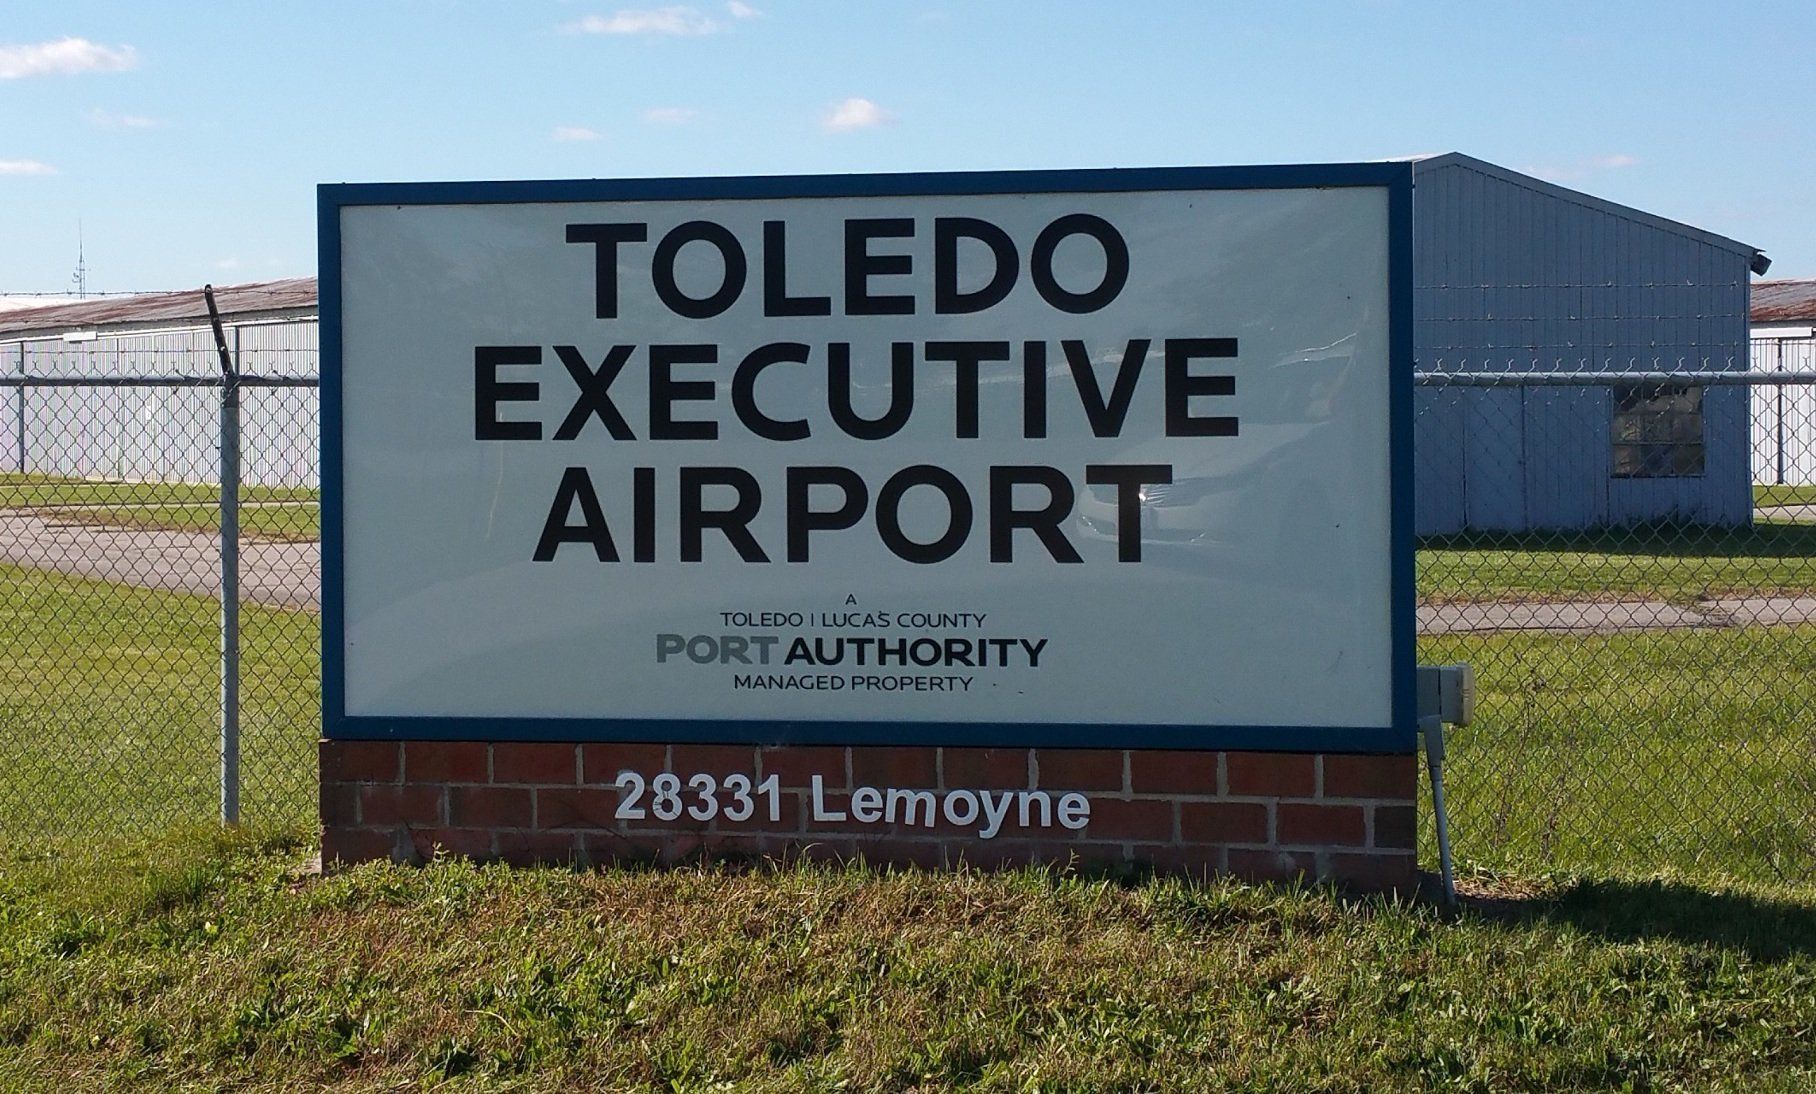 Toledo Executive Airport